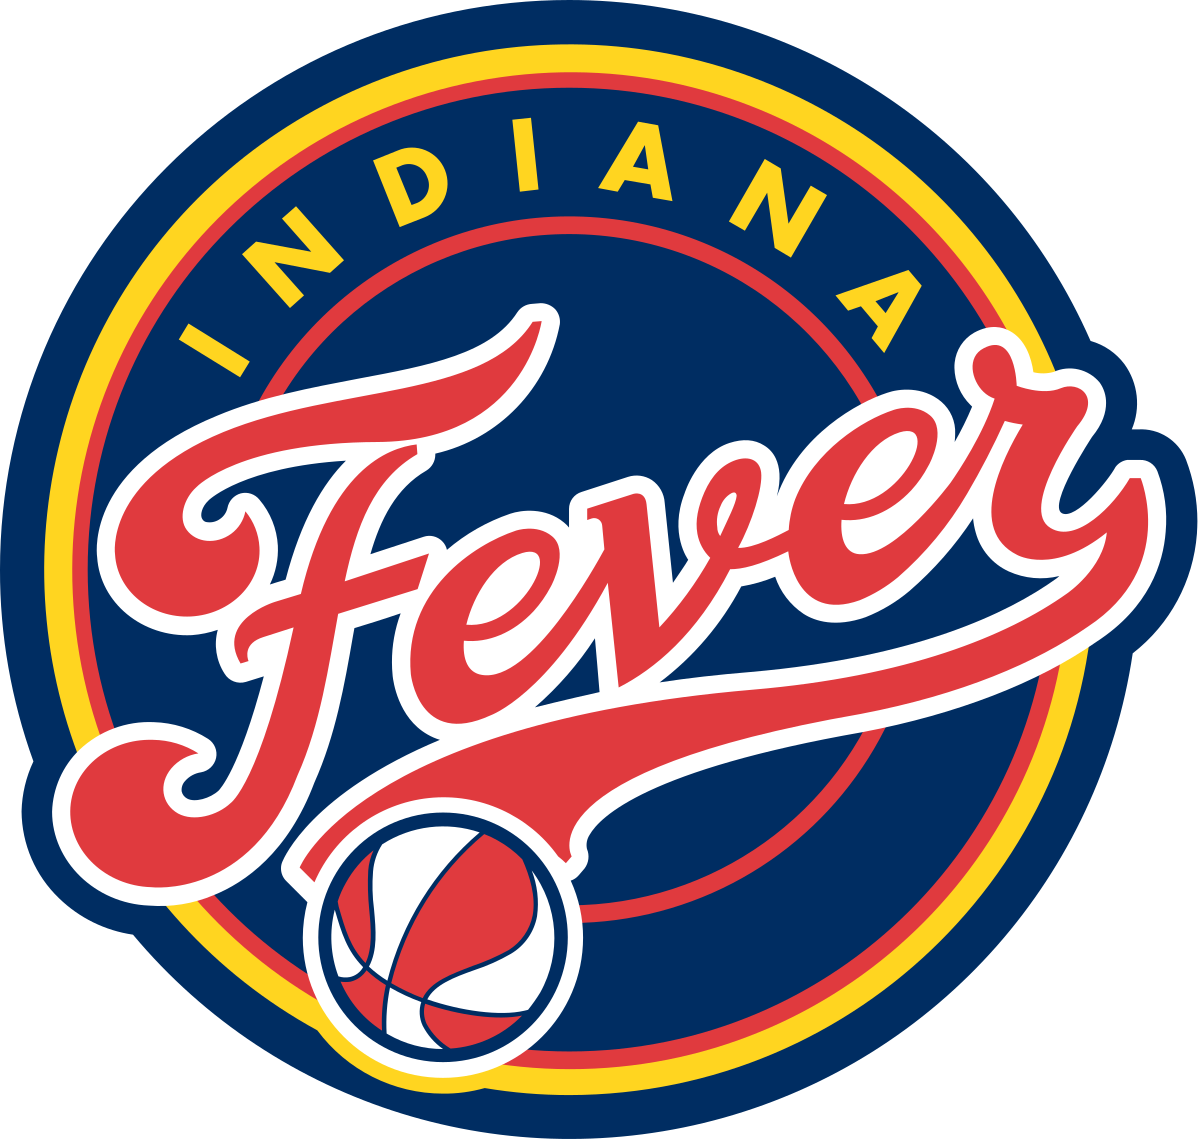 Indiana Fever - Wikipedia